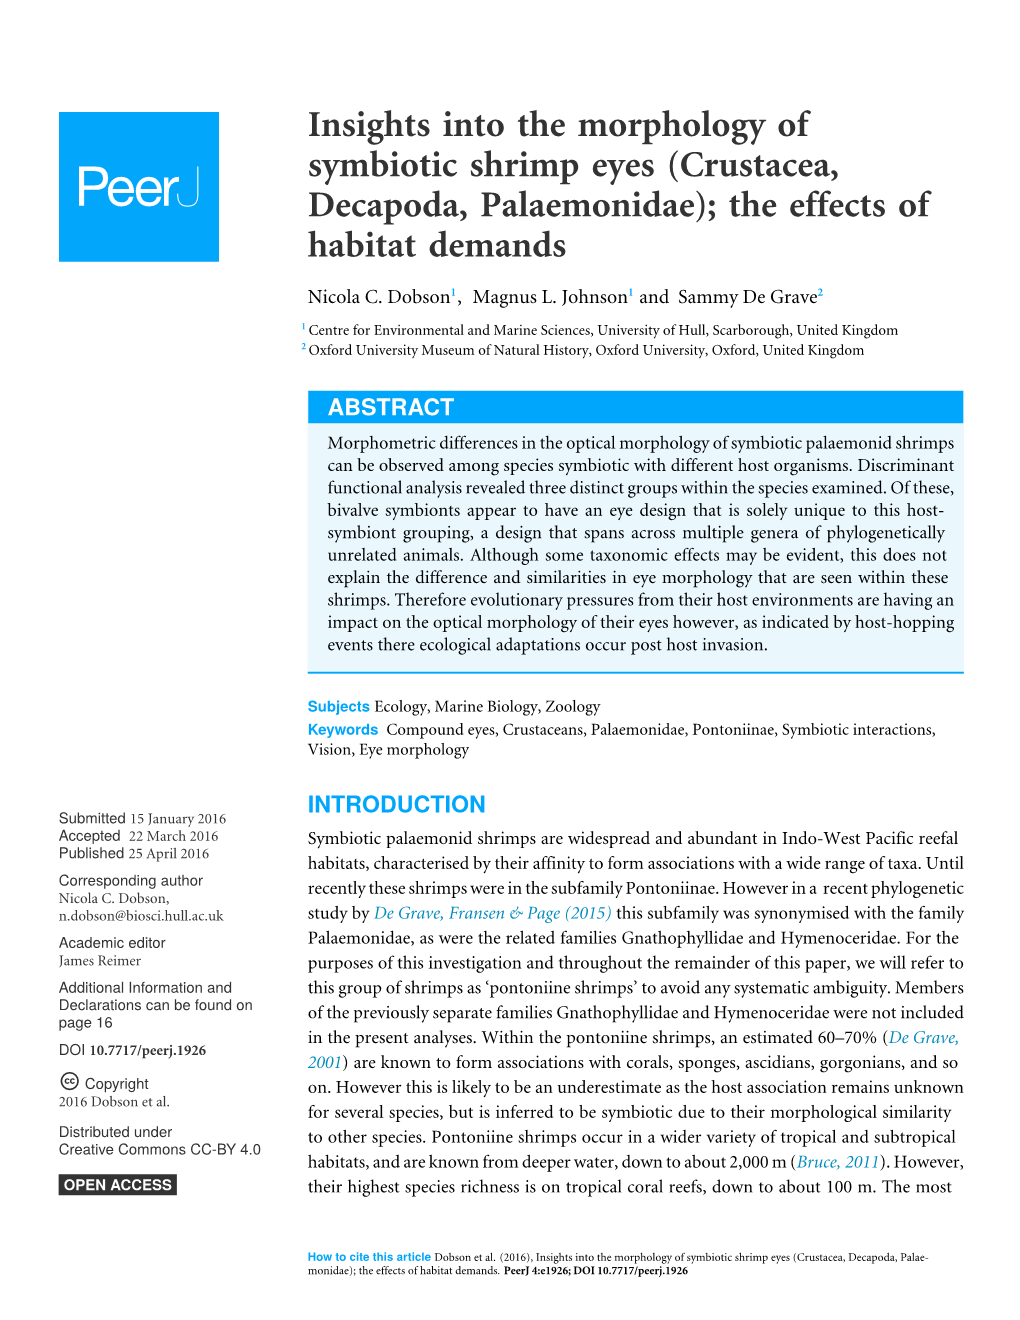 Crustacea, Decapoda, Palaemonidae); the Effects of Habitat Demands